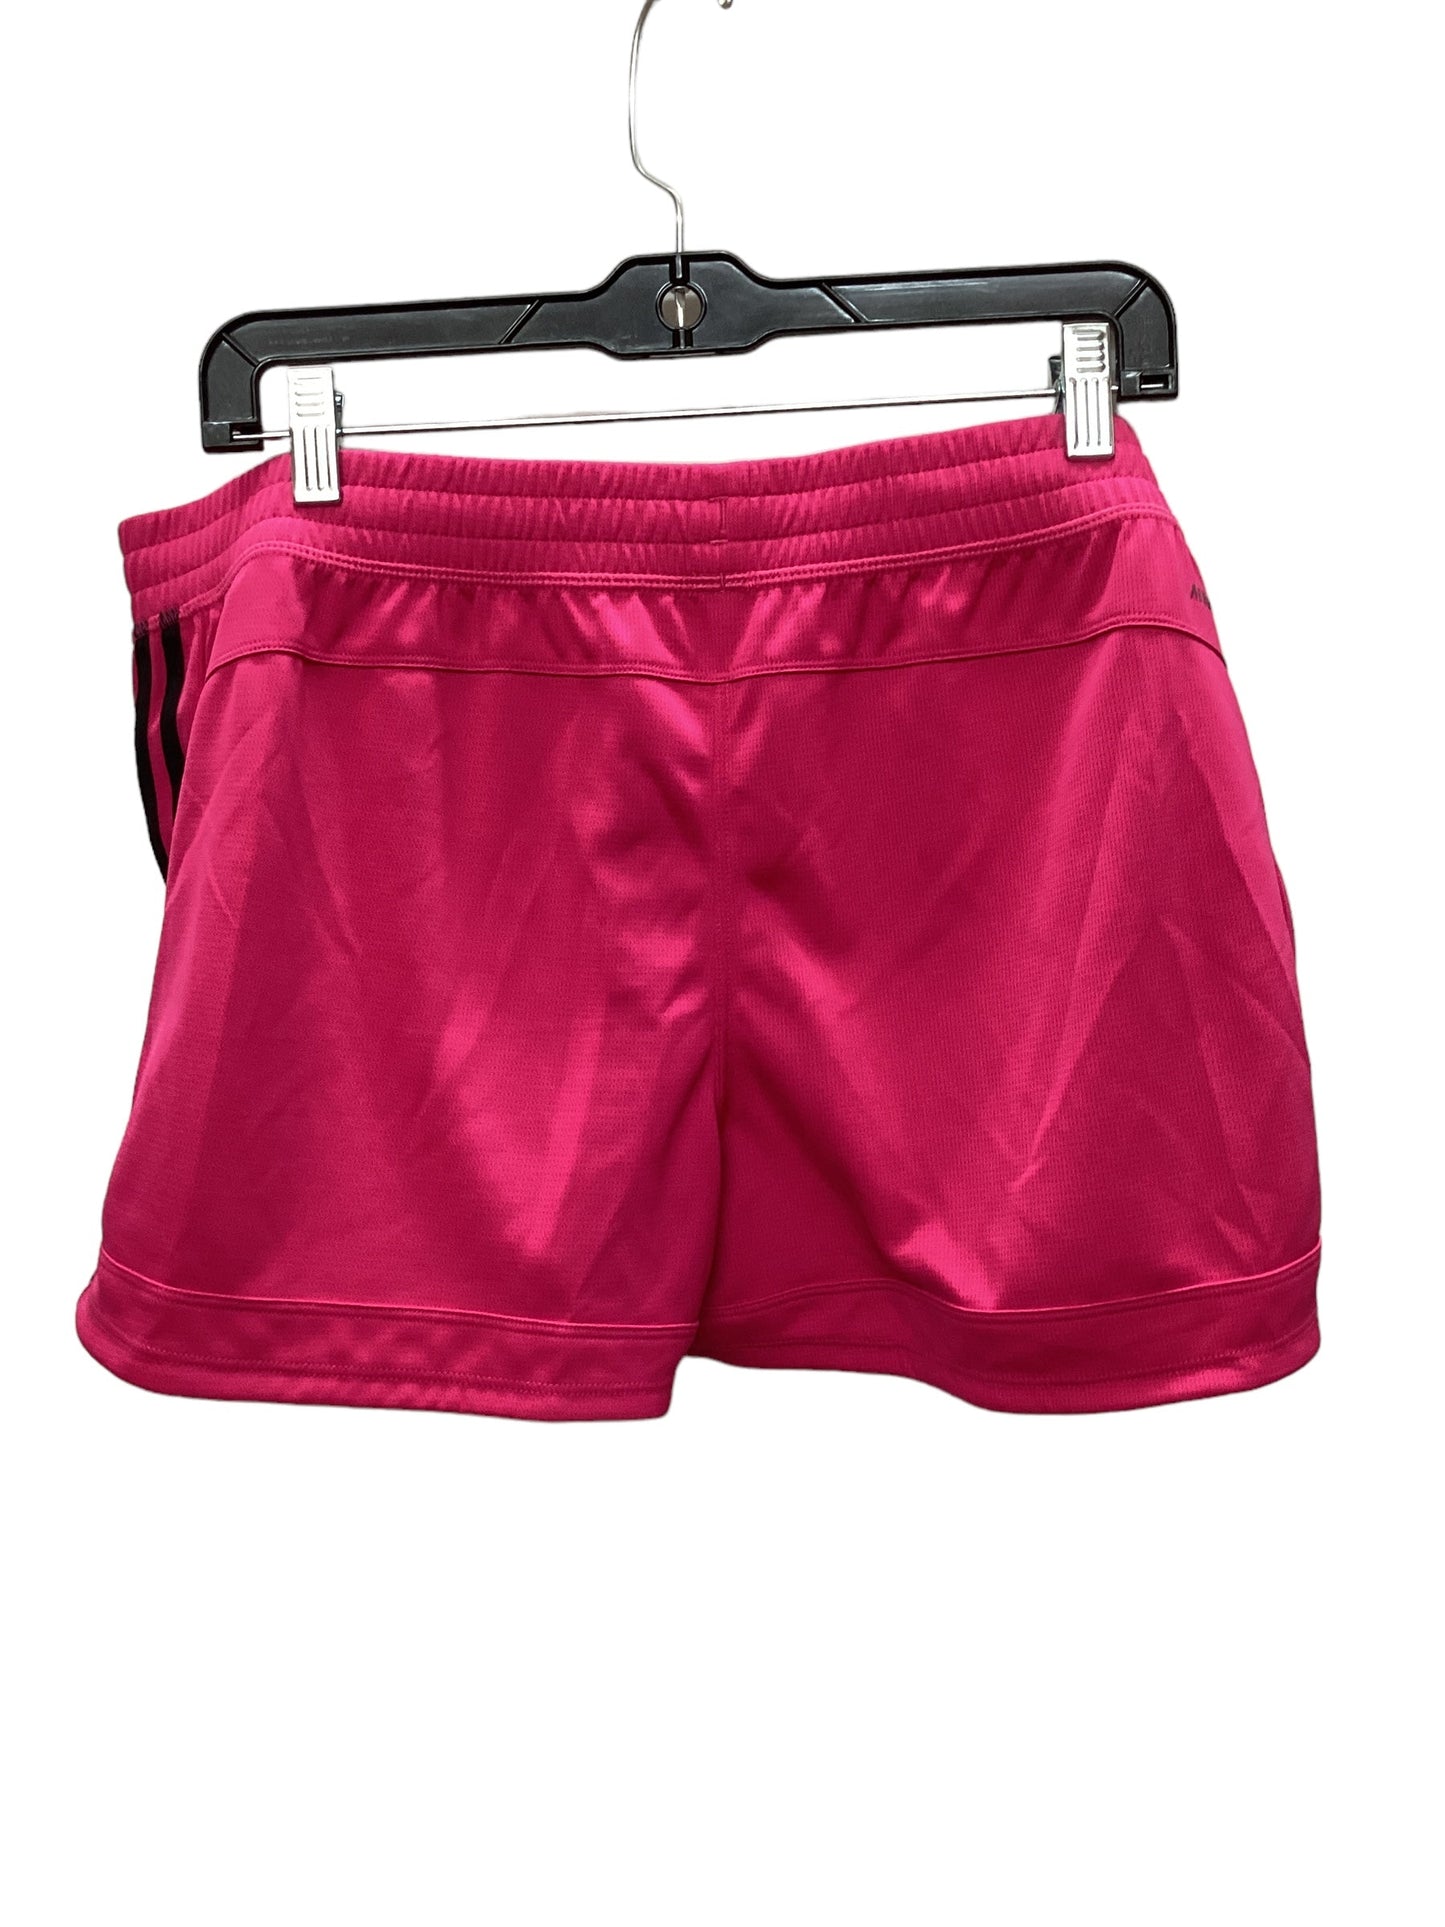 Athletic Shorts By Adidas  Size: Xl